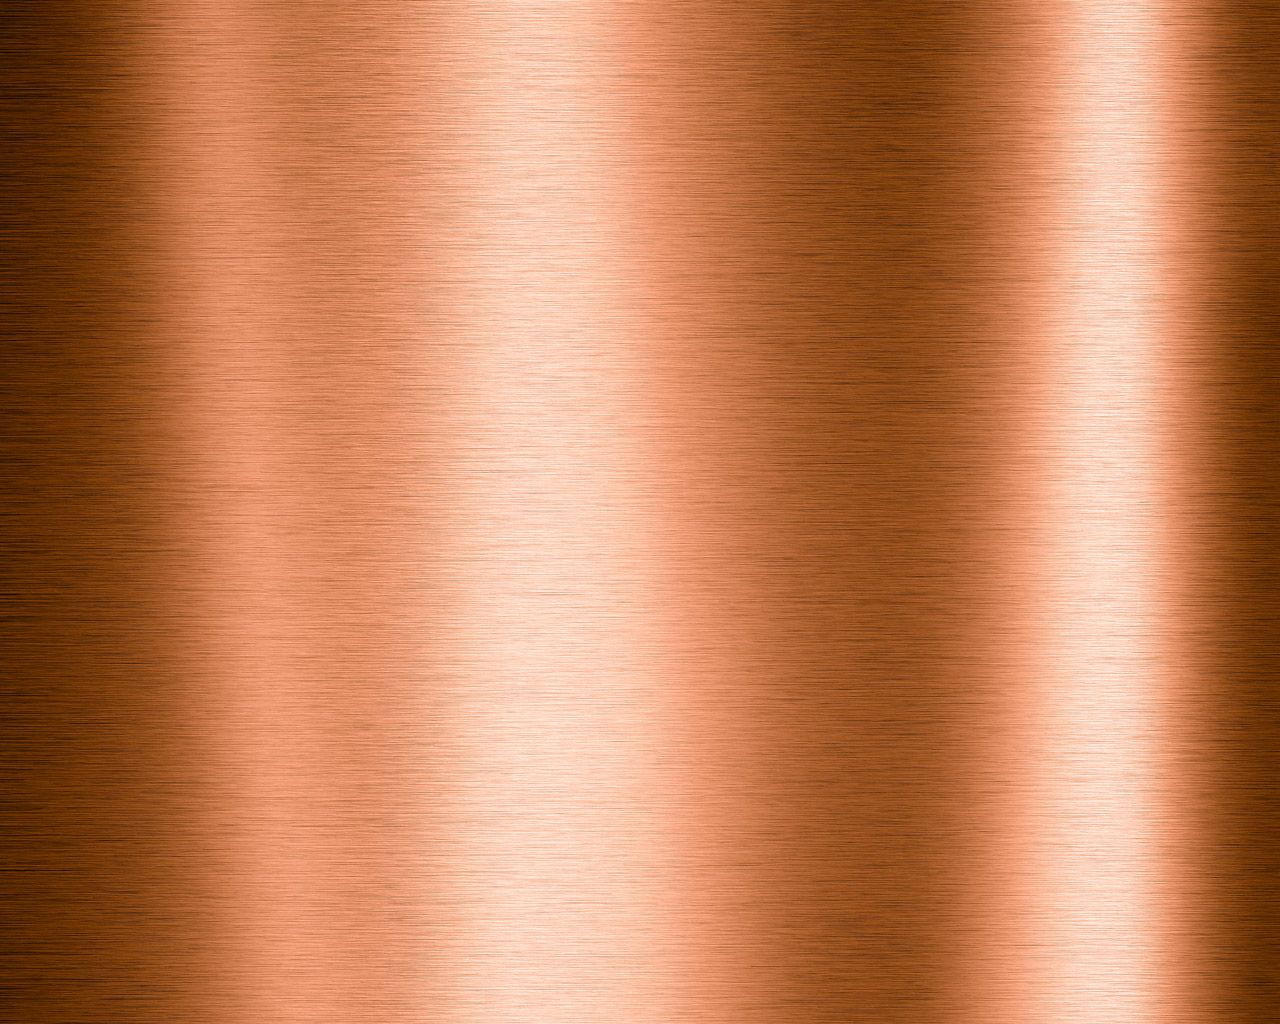 Polished Copper